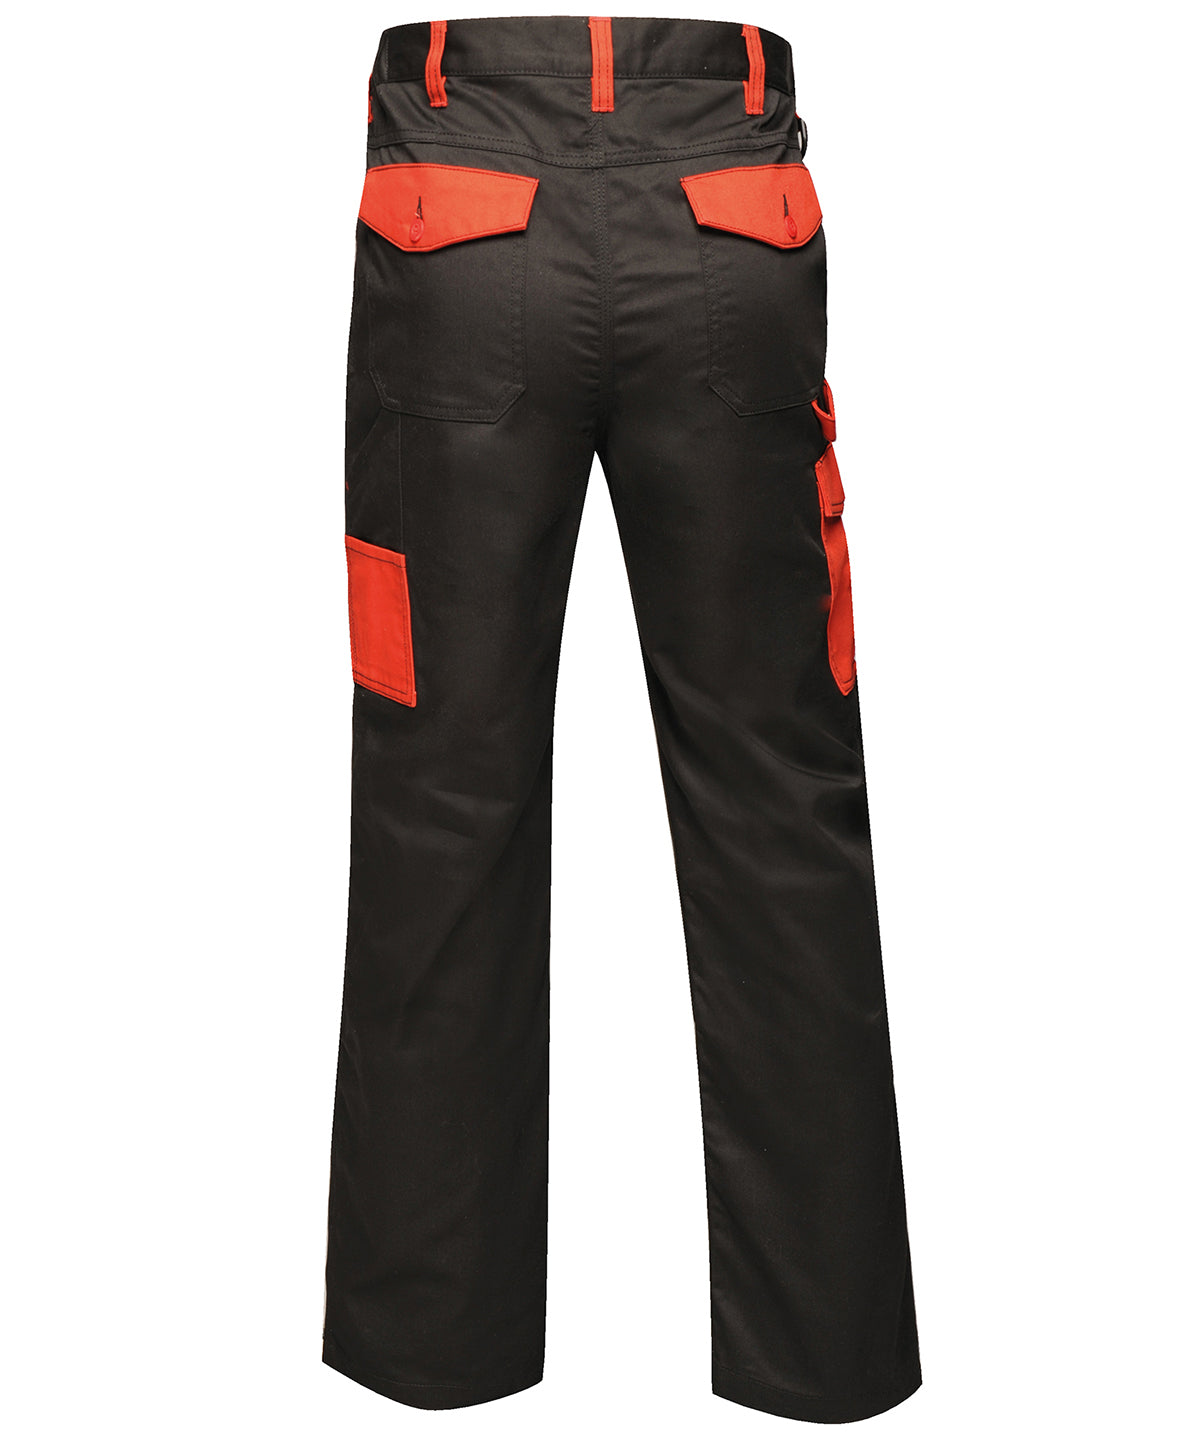 Regatta Professional Workwear RG667 Contrast Cargo Trousers Black/Red